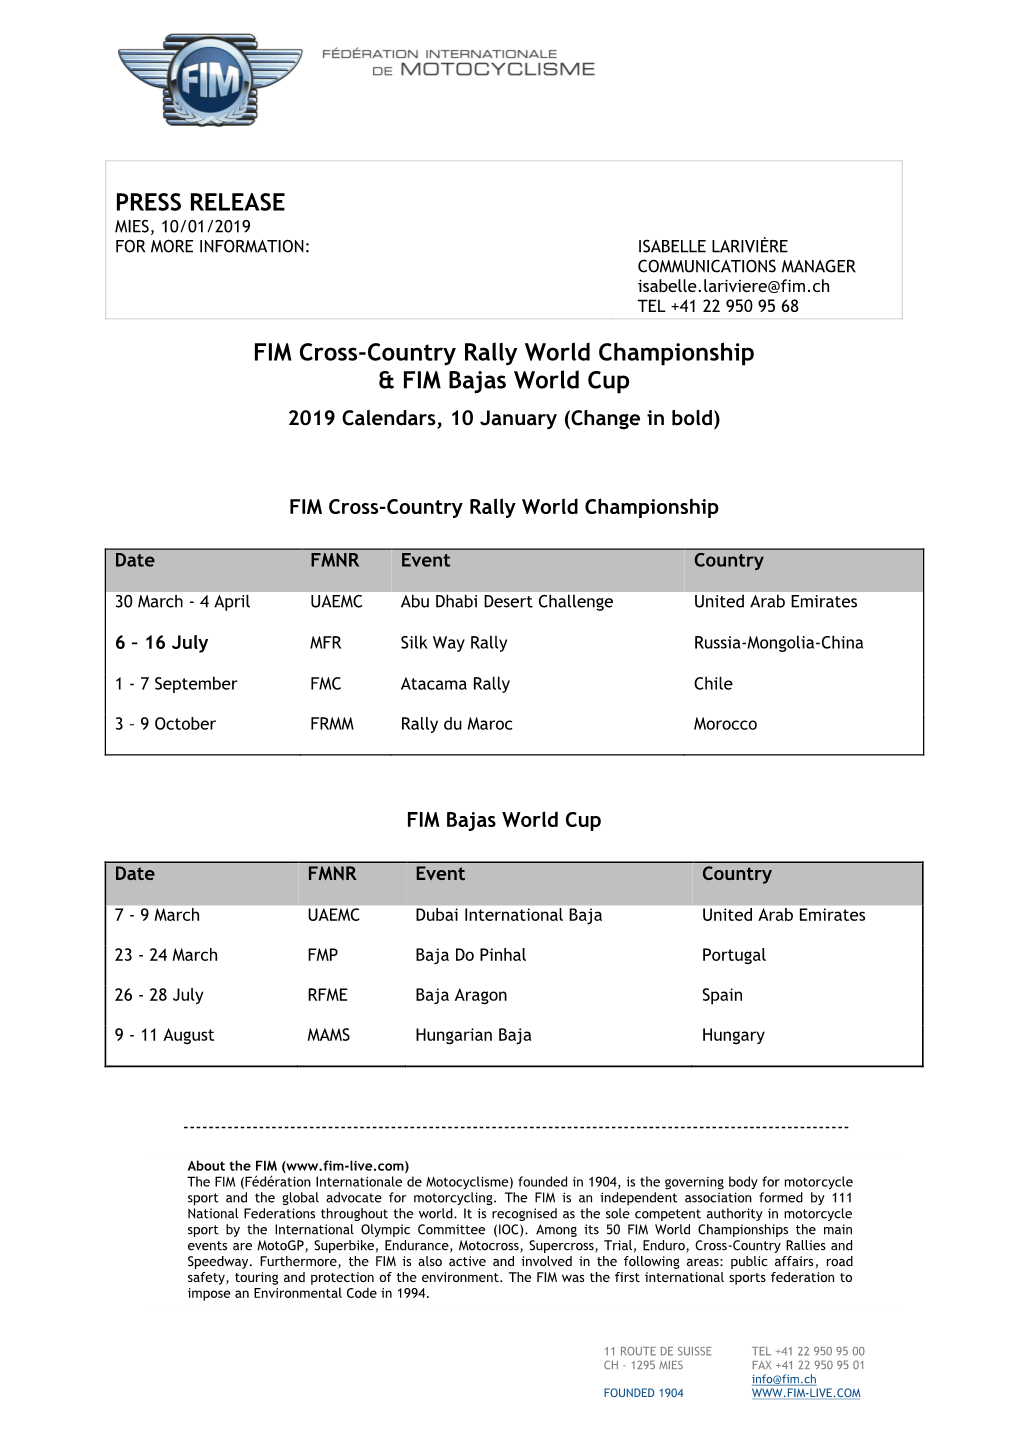 PRESS RELEASE FIM Cross-Country Rally World Championship & FIM